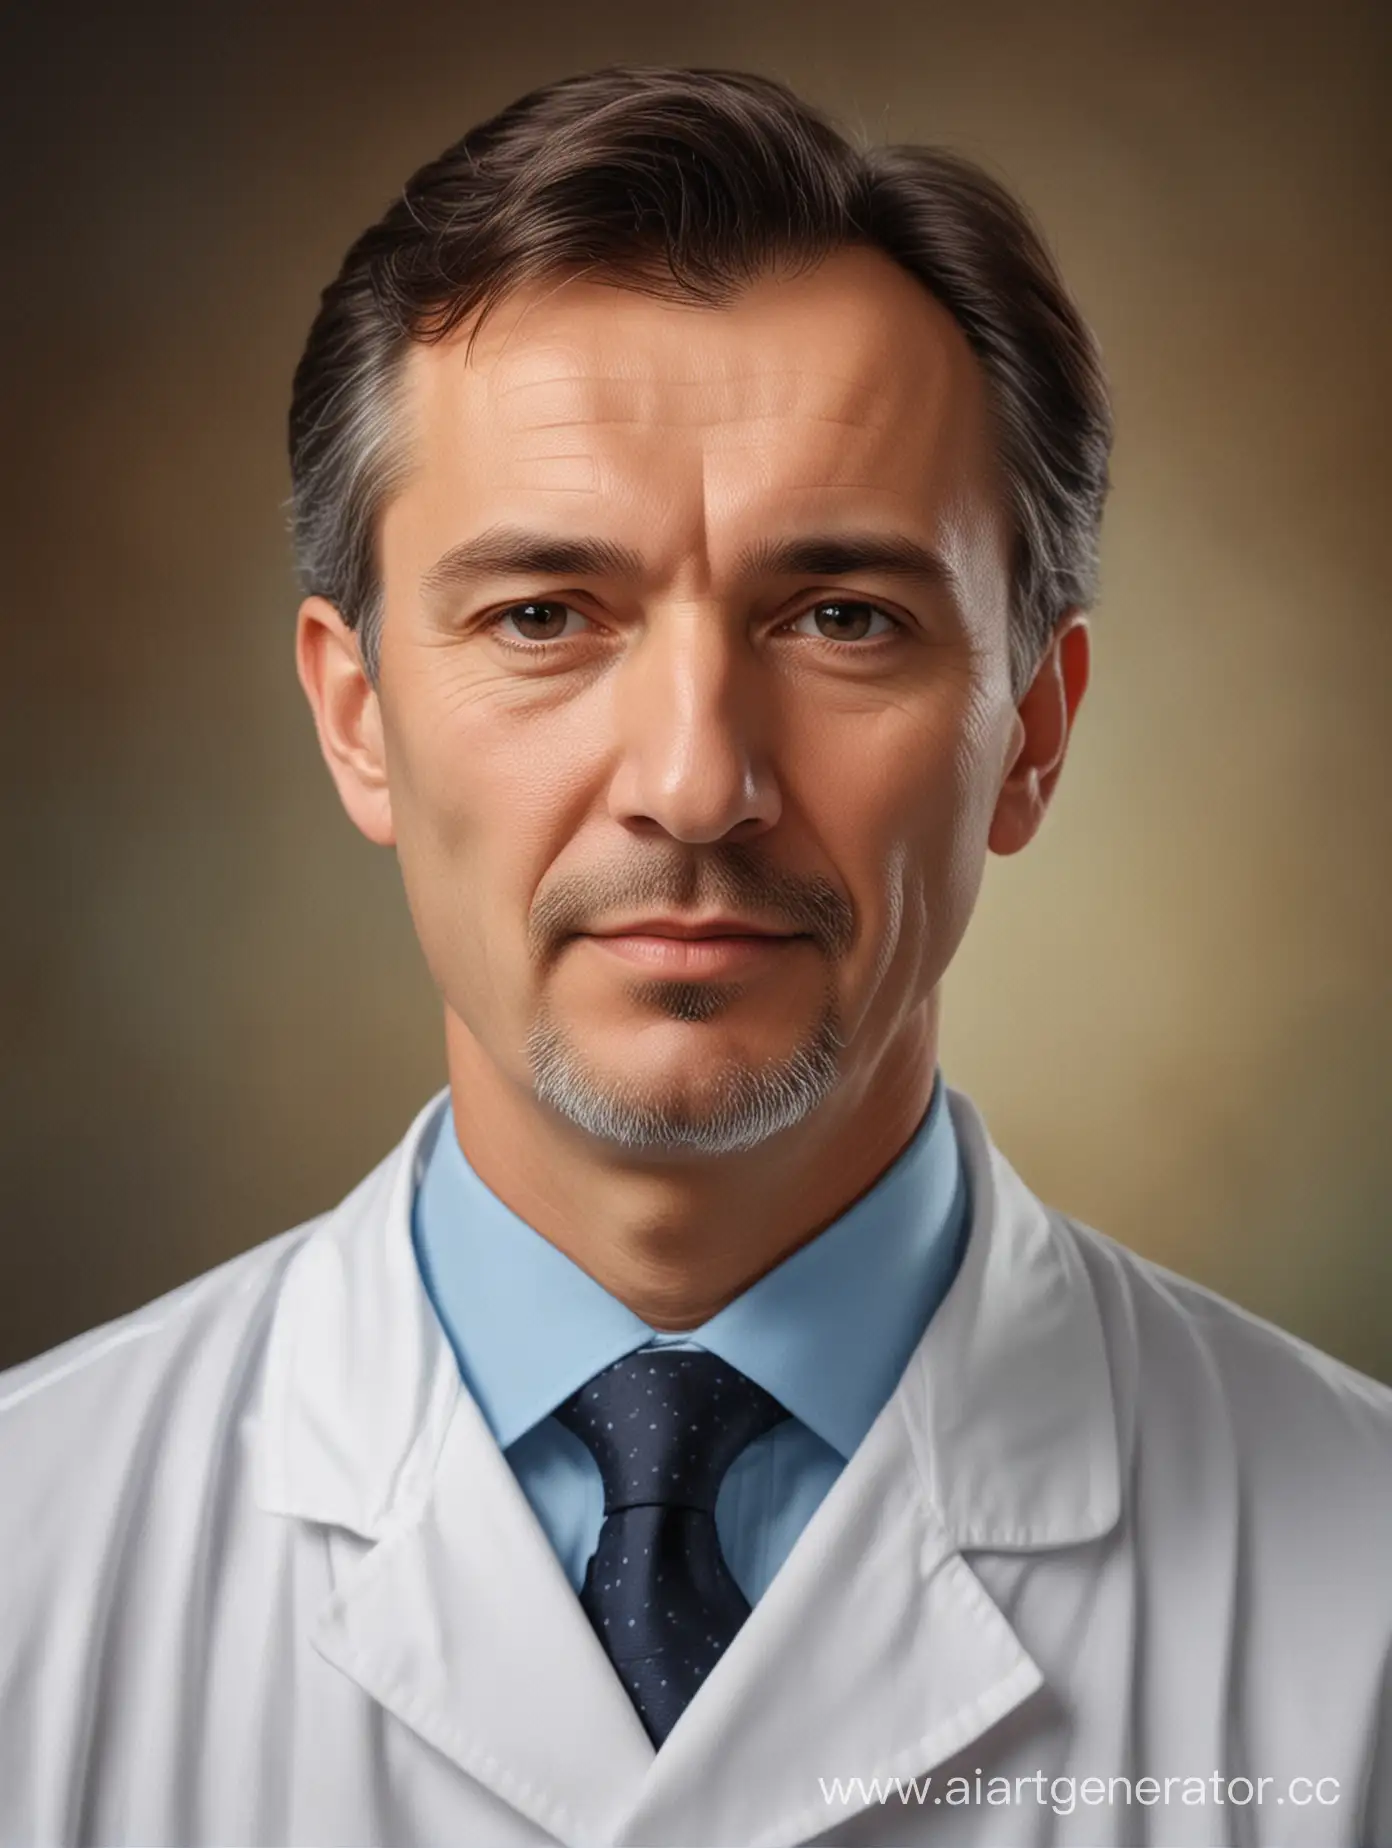 Konstantin-Mikhaylovich-50YearOld-Chief-Physician-Portrait